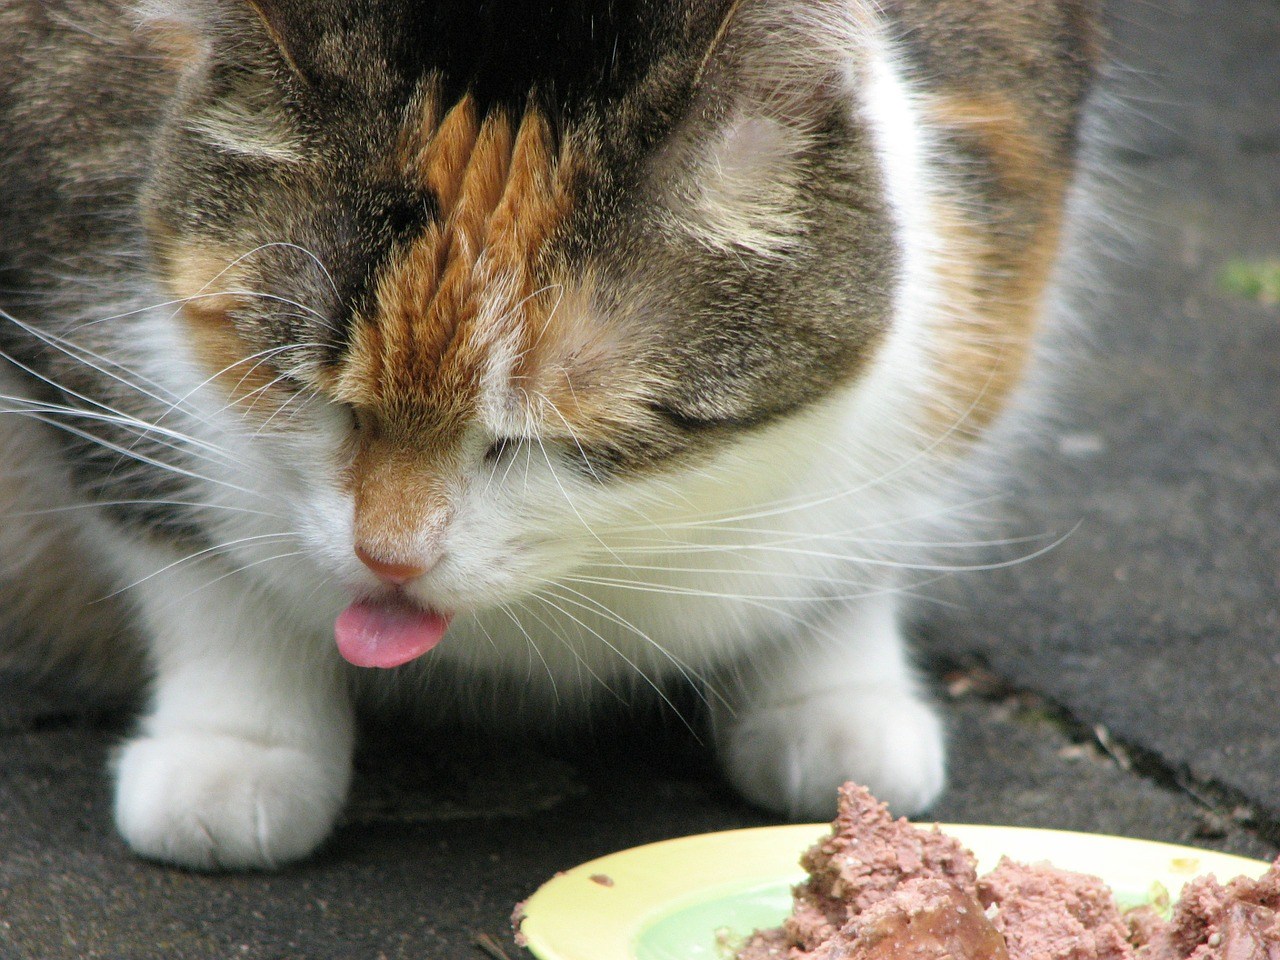 cat eating